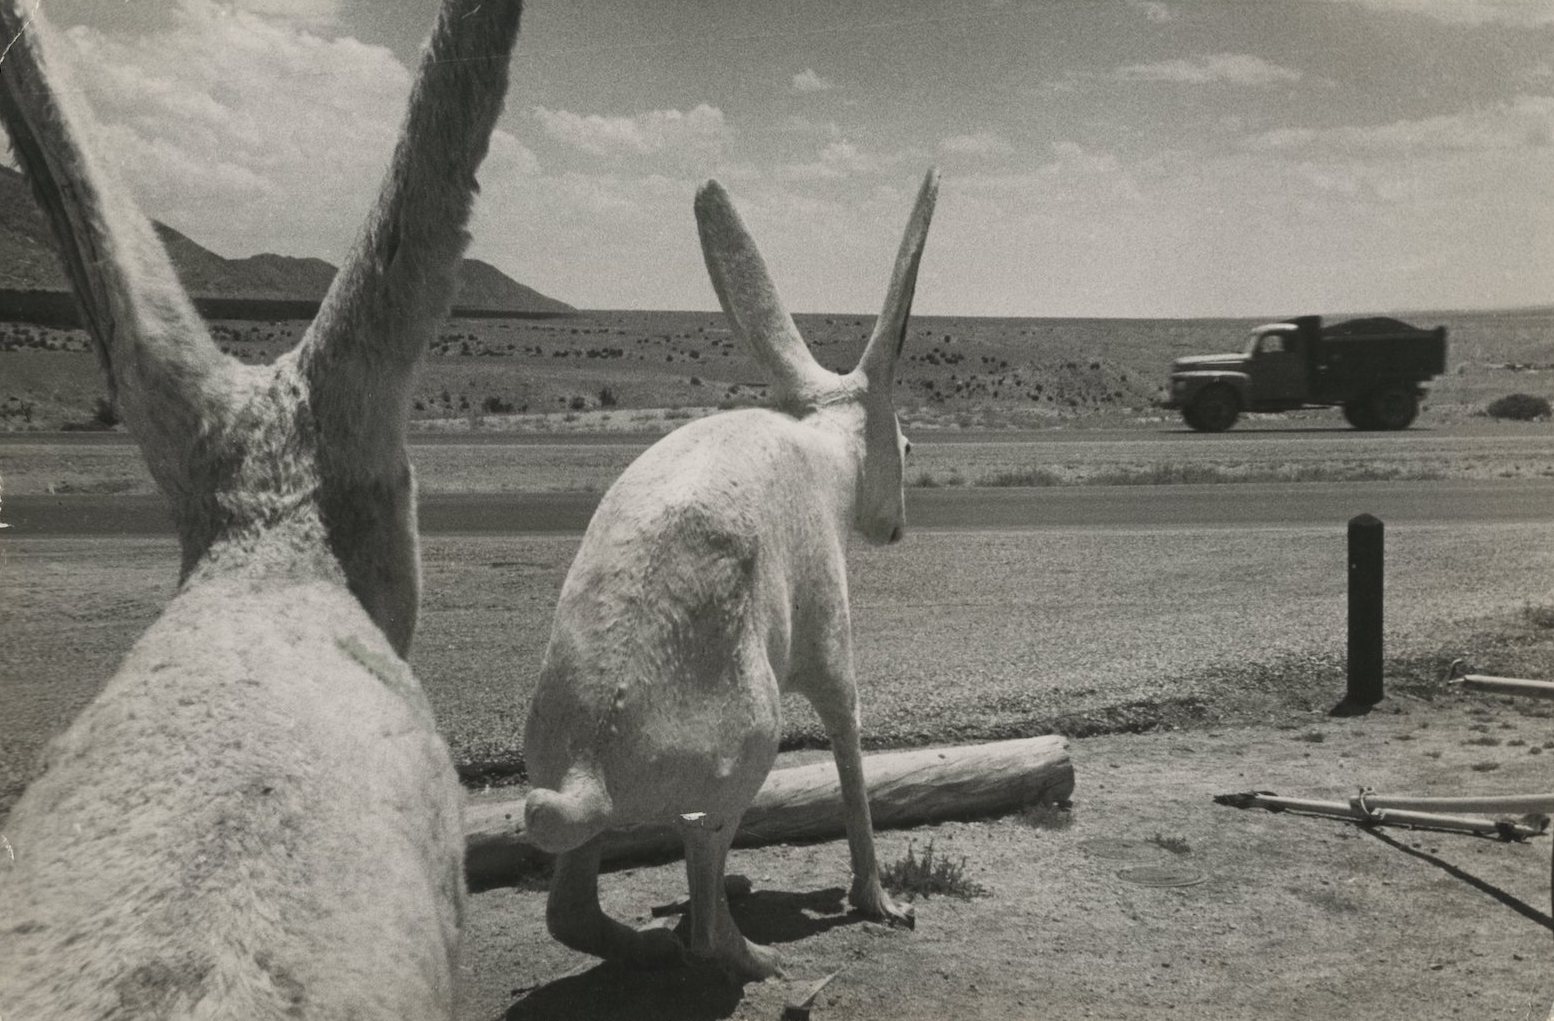 Land of Enchantment, New Mexico, USA, 1952